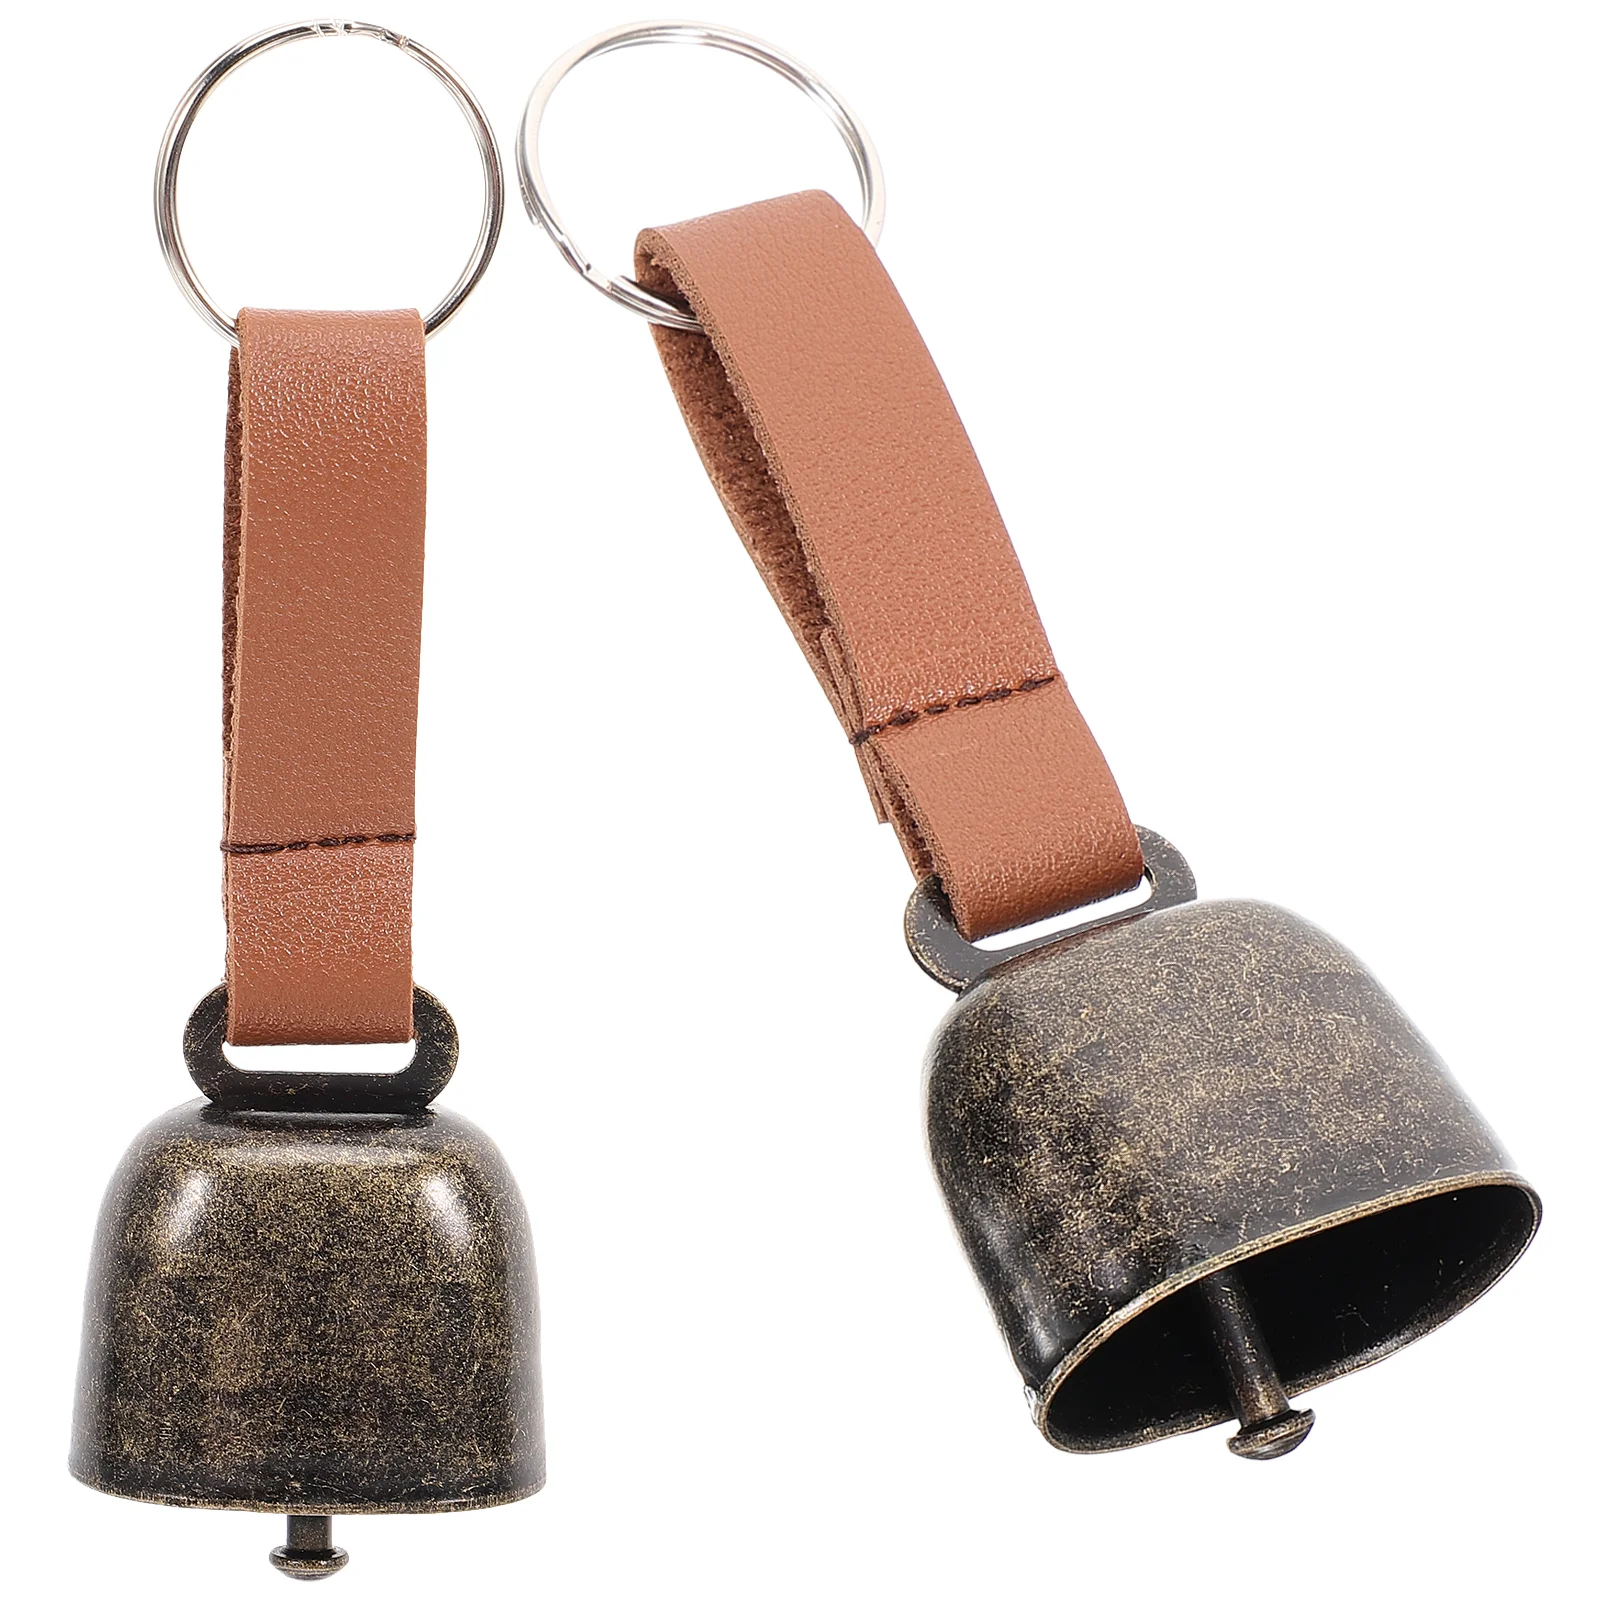 

2 Pcs Bear Repelling Bell Bells for Climbing Vintage Hiking Loud Ring Camping Metal Anti-lost Pet Hanging Dog Travel